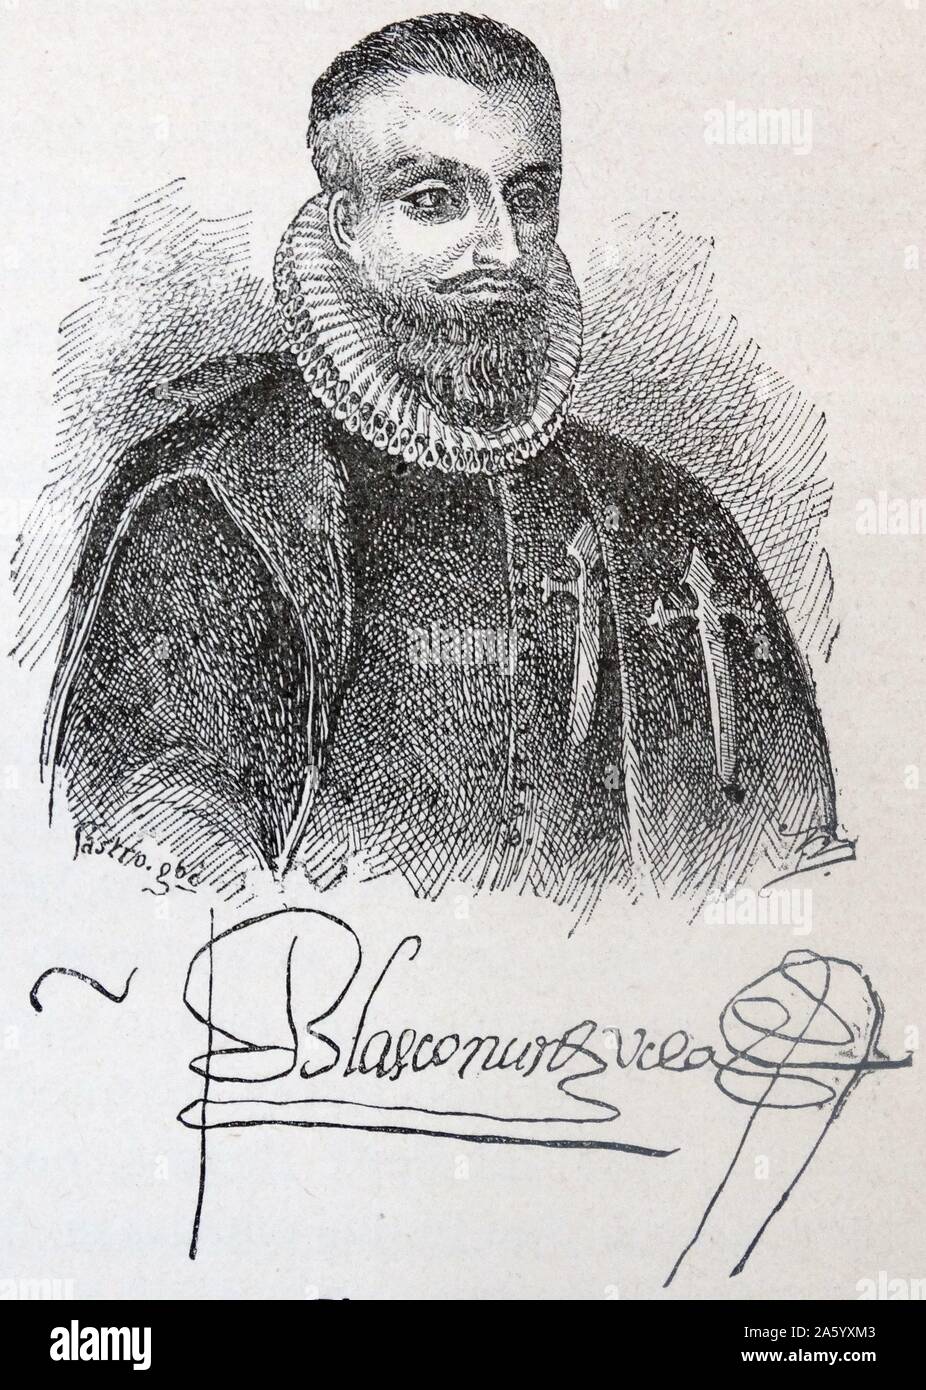 Blasco Núñez Vela y Villalba (c. 1490 – January 18, 1546) was the first Spanish viceroy of Peru, from May 15, 1544 to January 18, 1546 Stock Photo